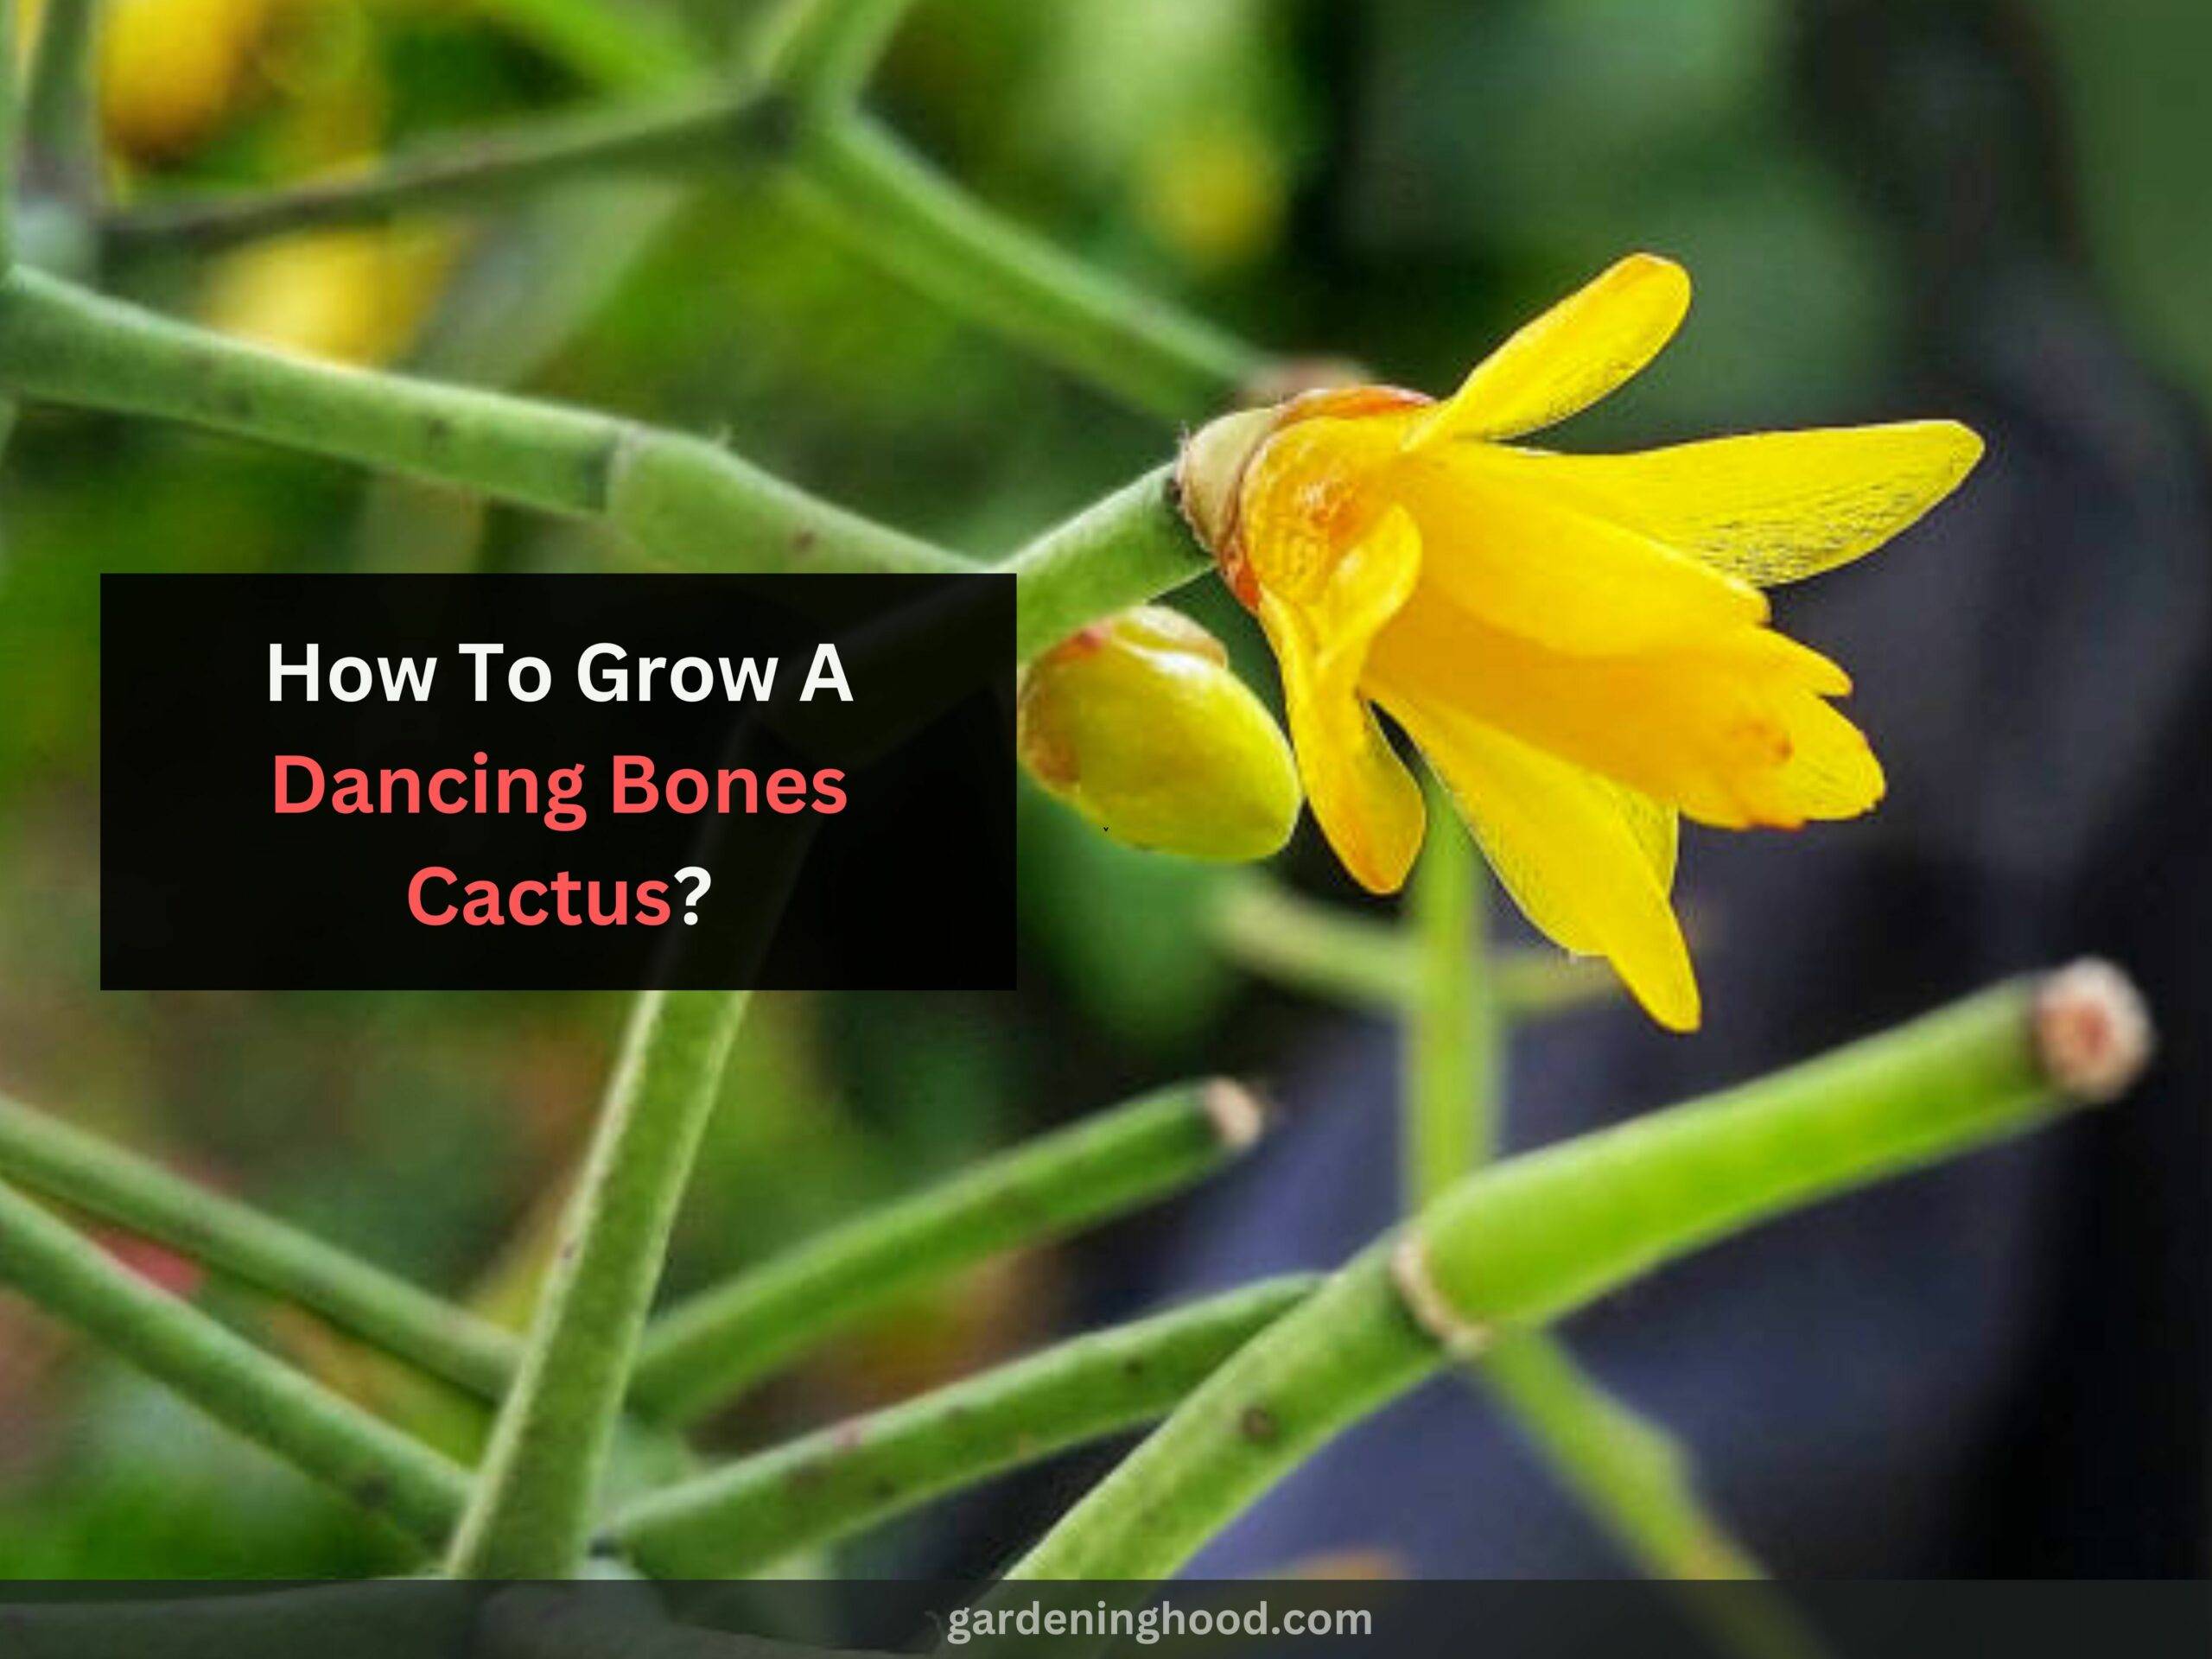 How To Grow A Dancing Bones Cactus?